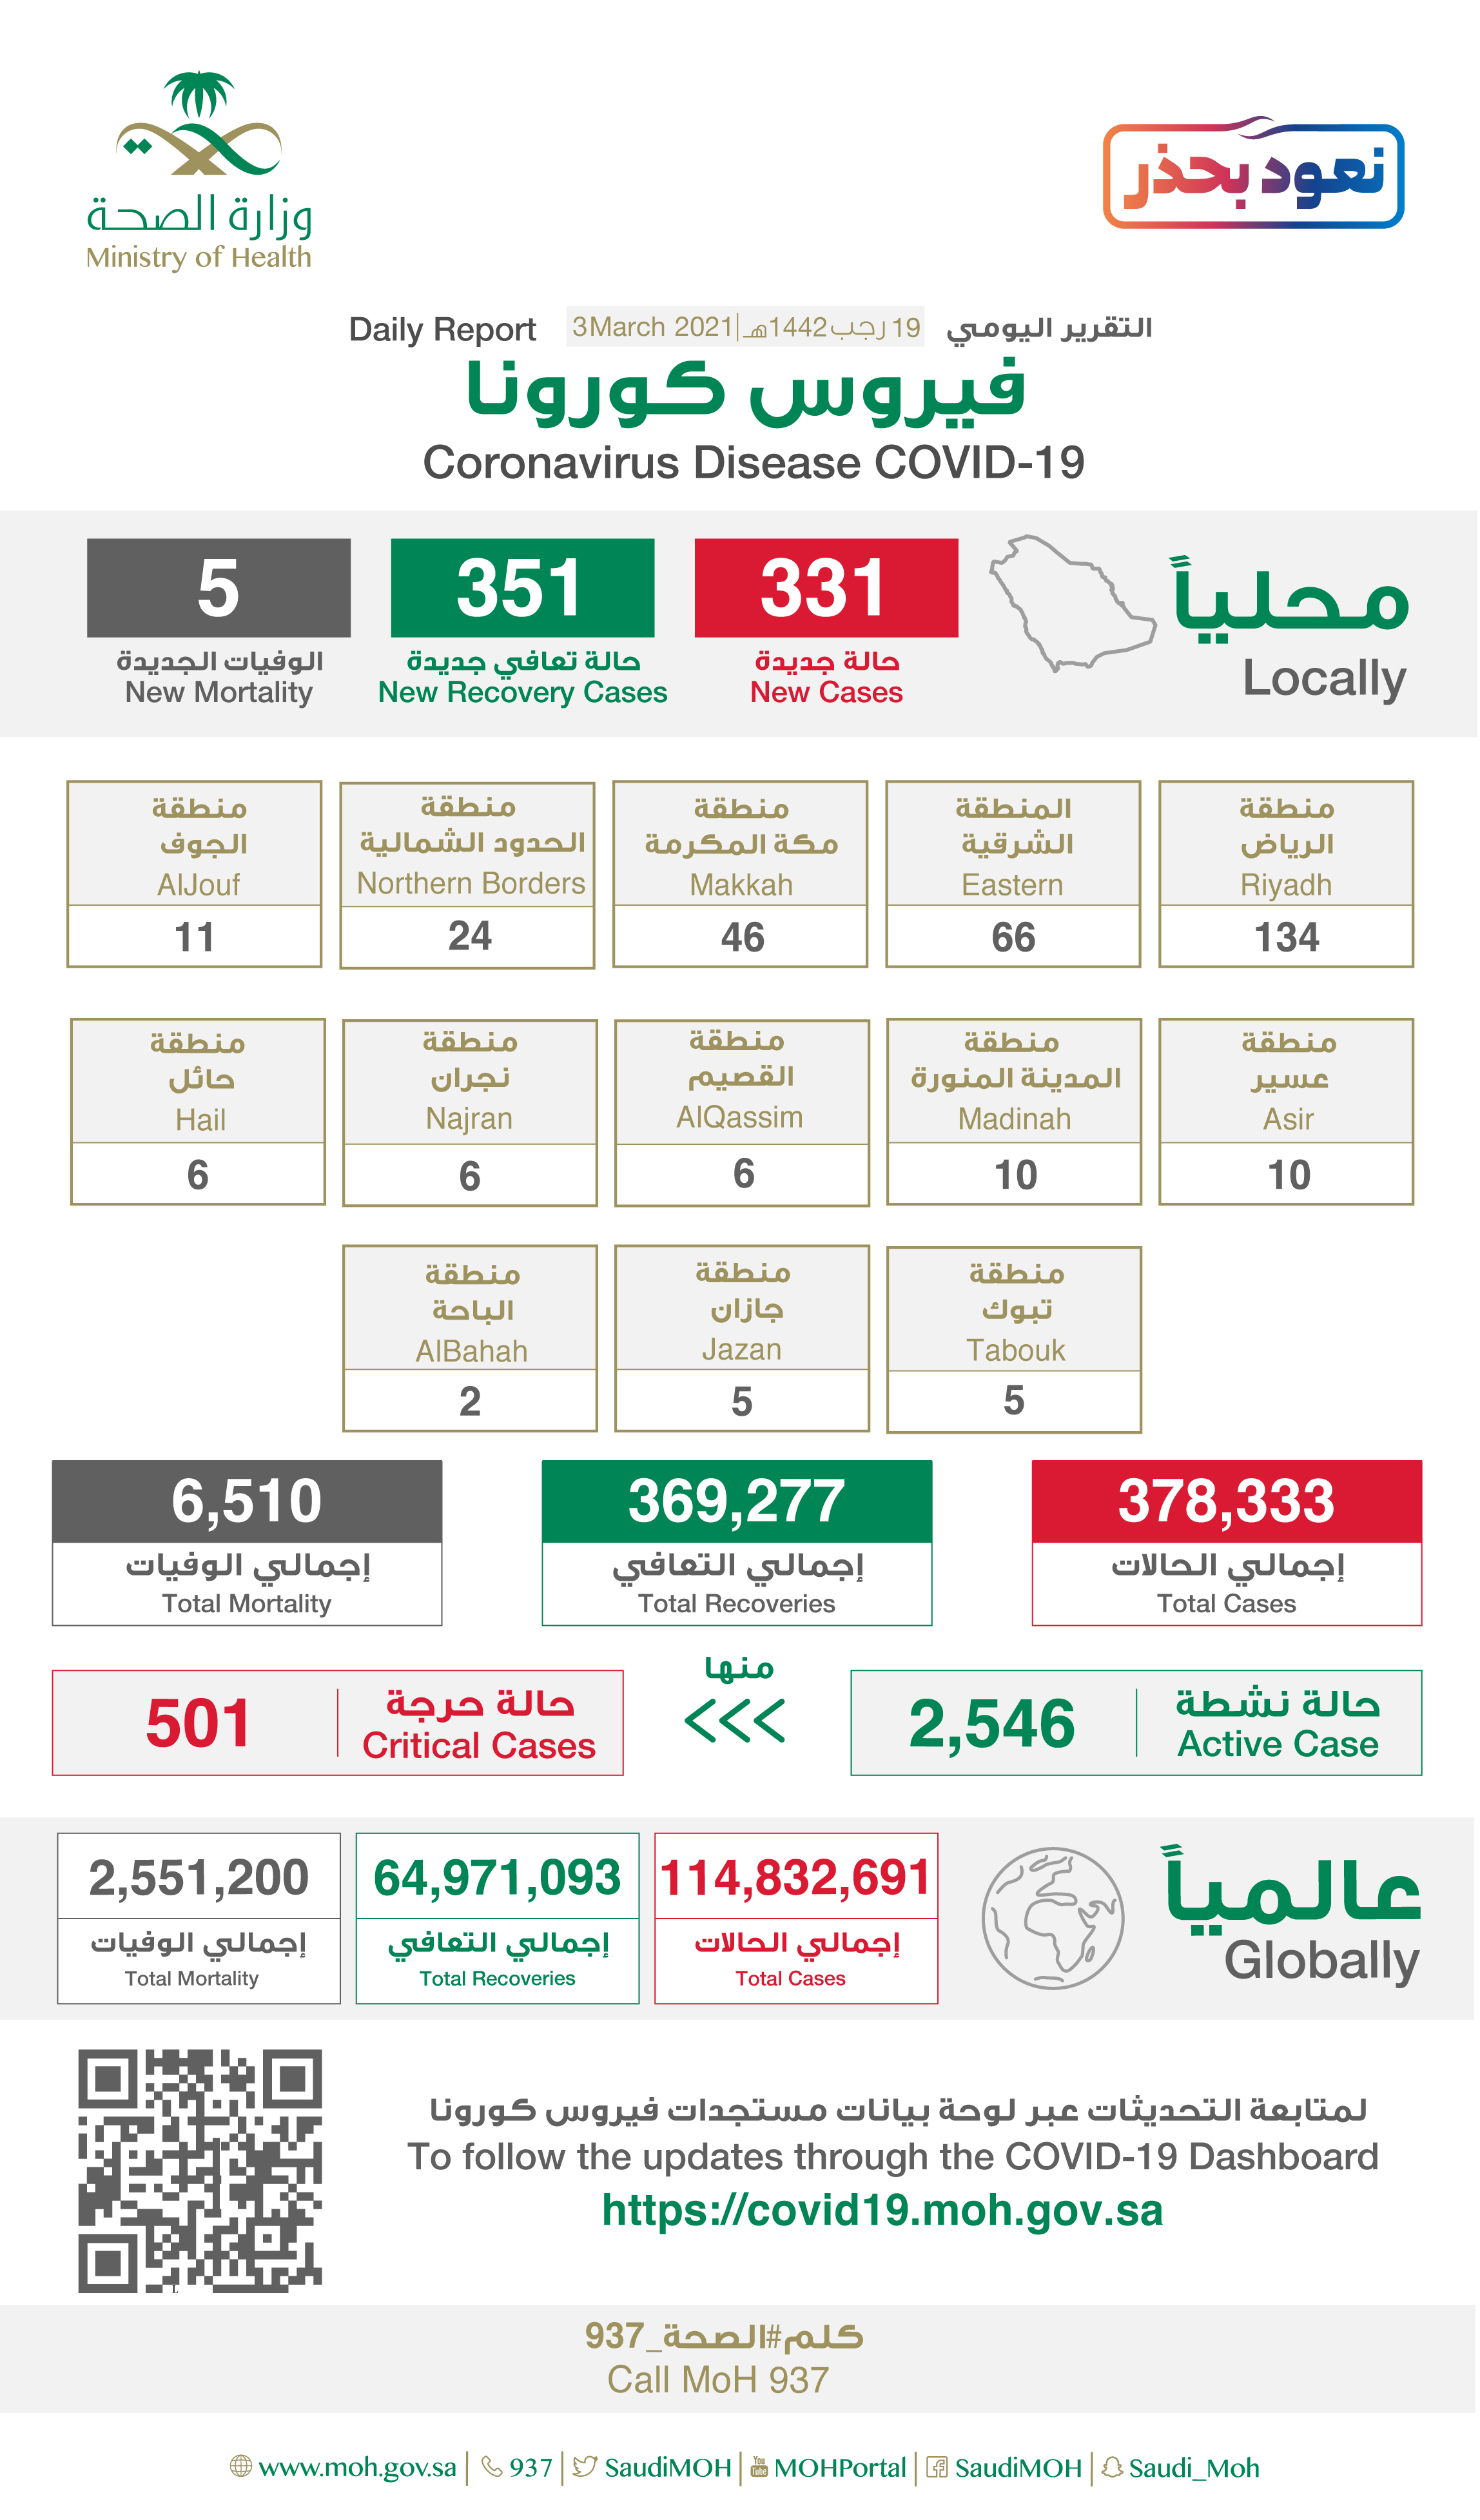 Saudi Arabia Coronavirus : Total Cases :378,333 , New Cases : 331, Cured : 369,277 , Deaths: 6,510, Active Cases : 2,546